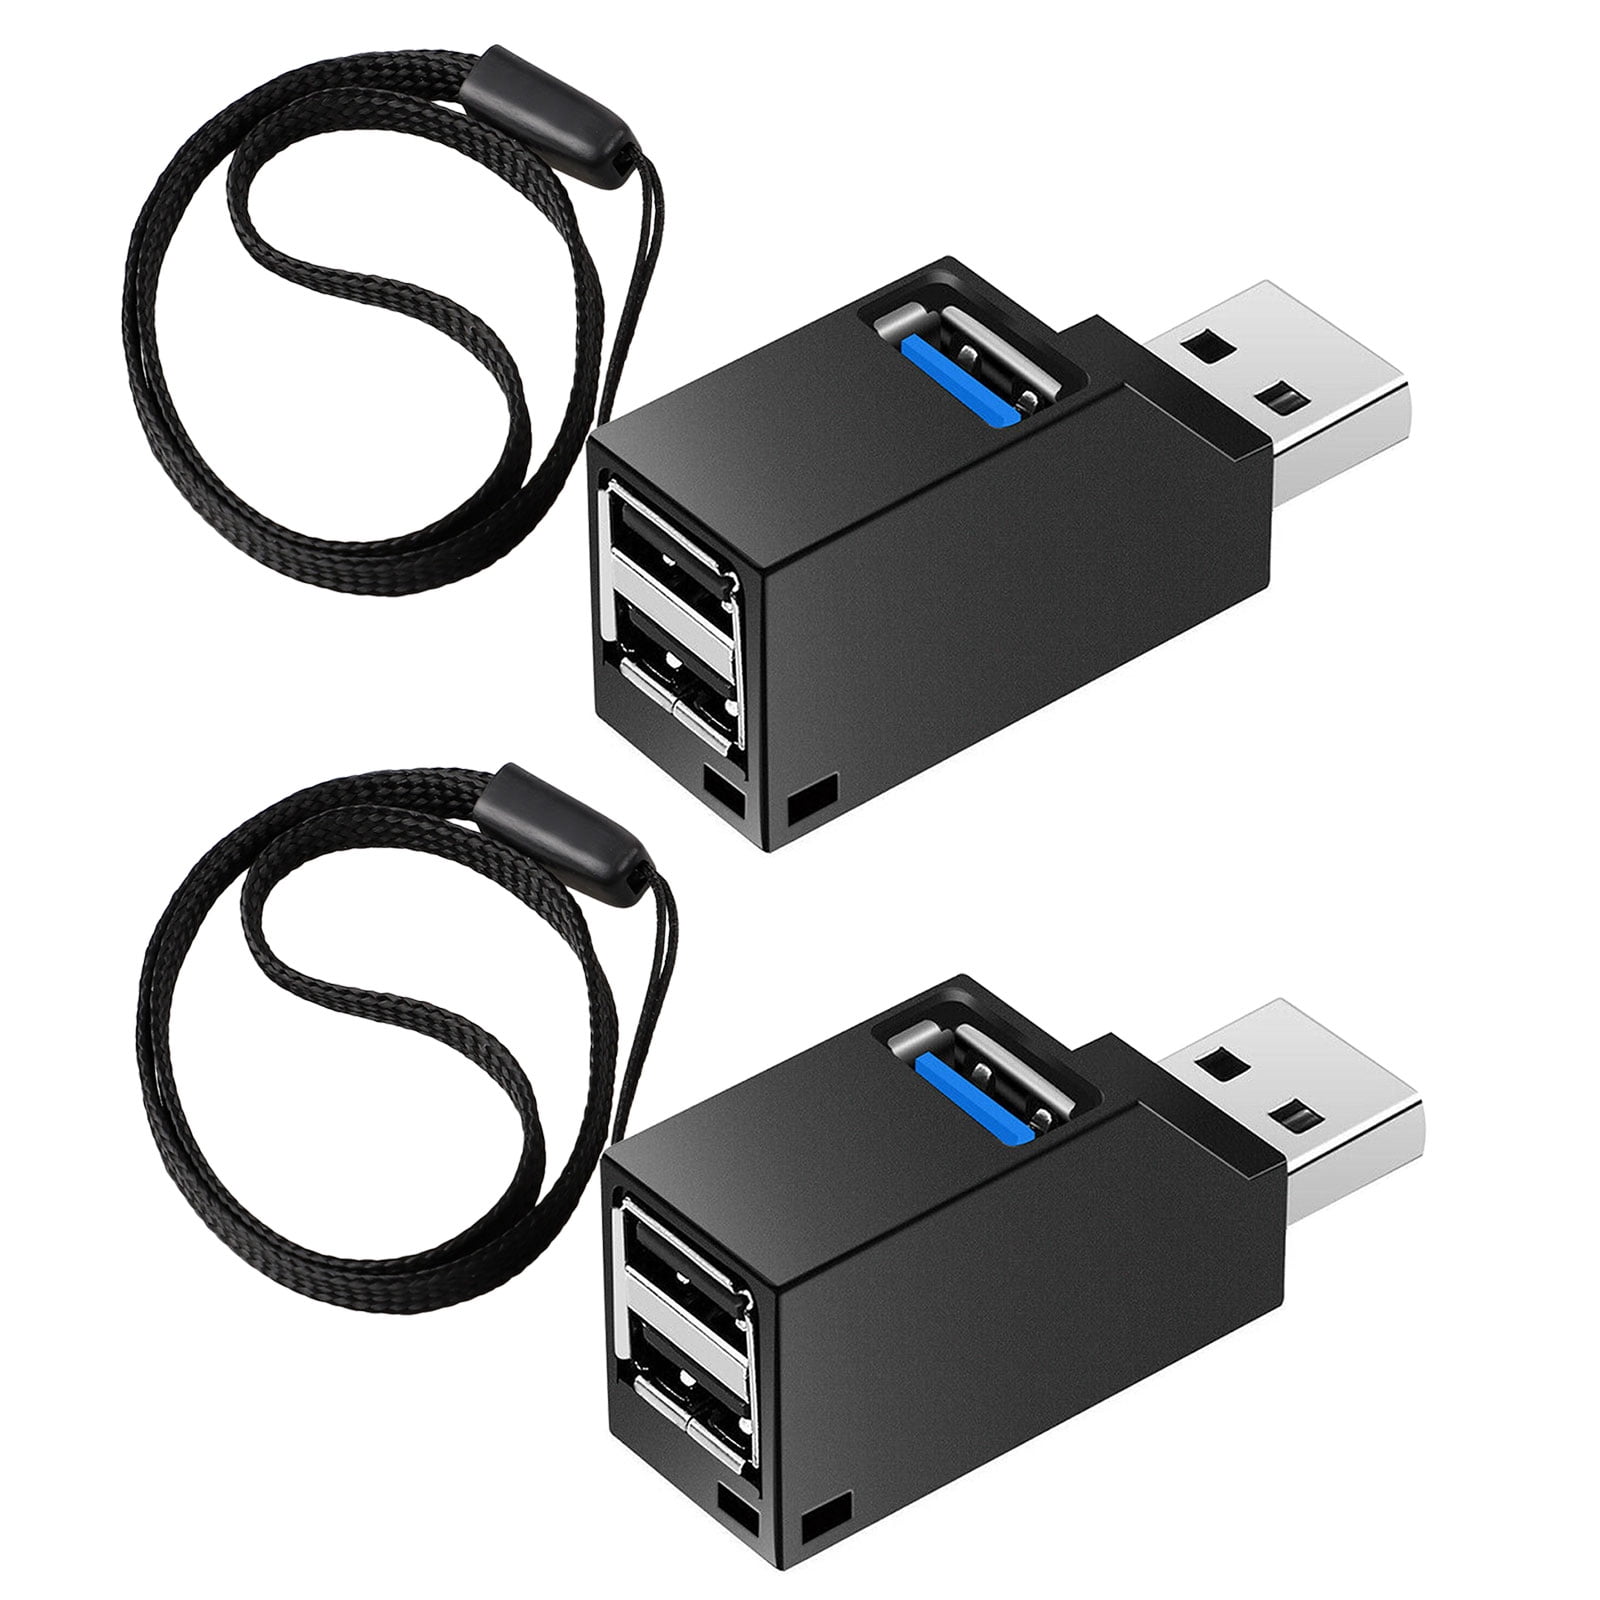 USB 3.0 Hub 3 Ports Mini Splitter High Speed Data Transfer For PC